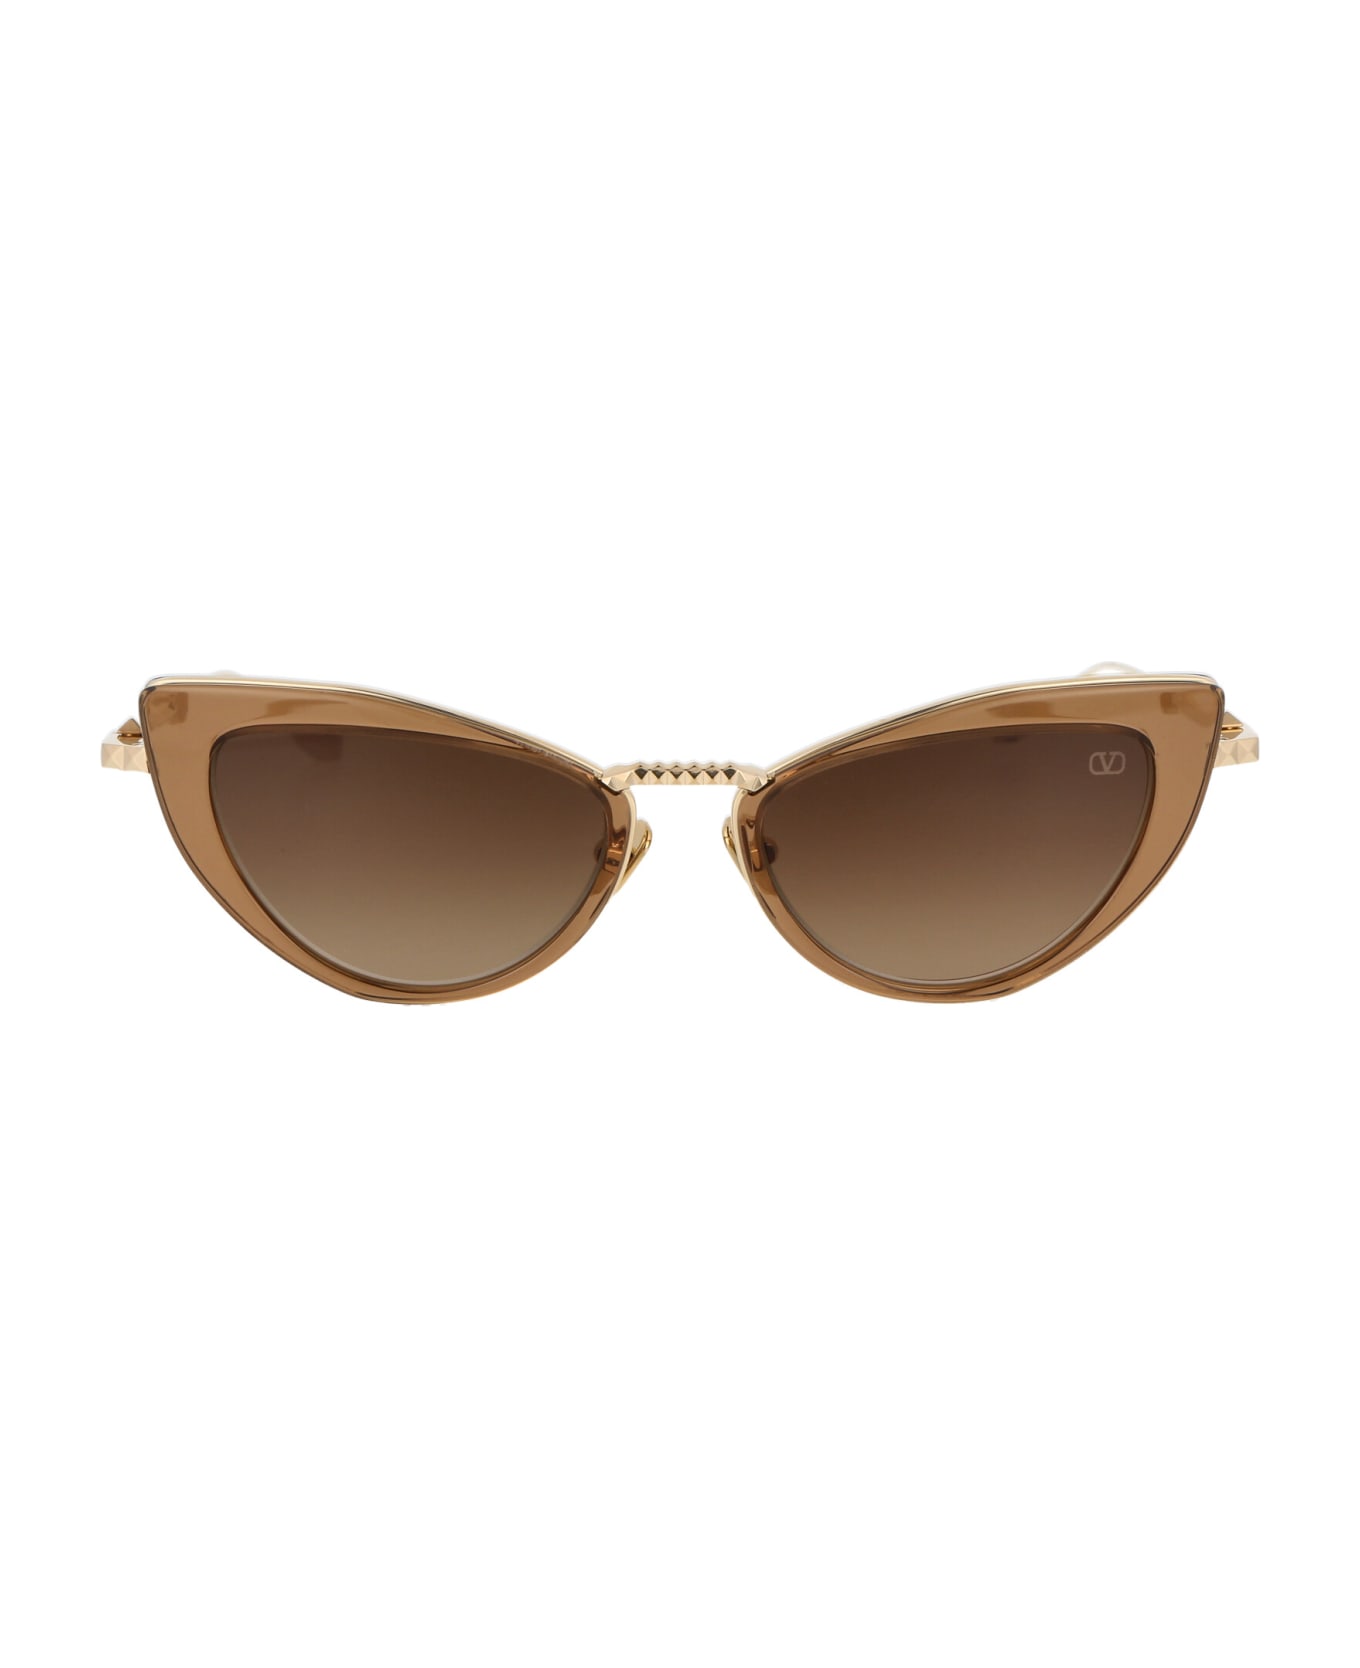 Valentino Eyewear Viii Sunglasses - LIGHT GOLD CRYSTAL MEDIUM BROWN W/ DARK BROWN TO LIGHT BROWN サングラス